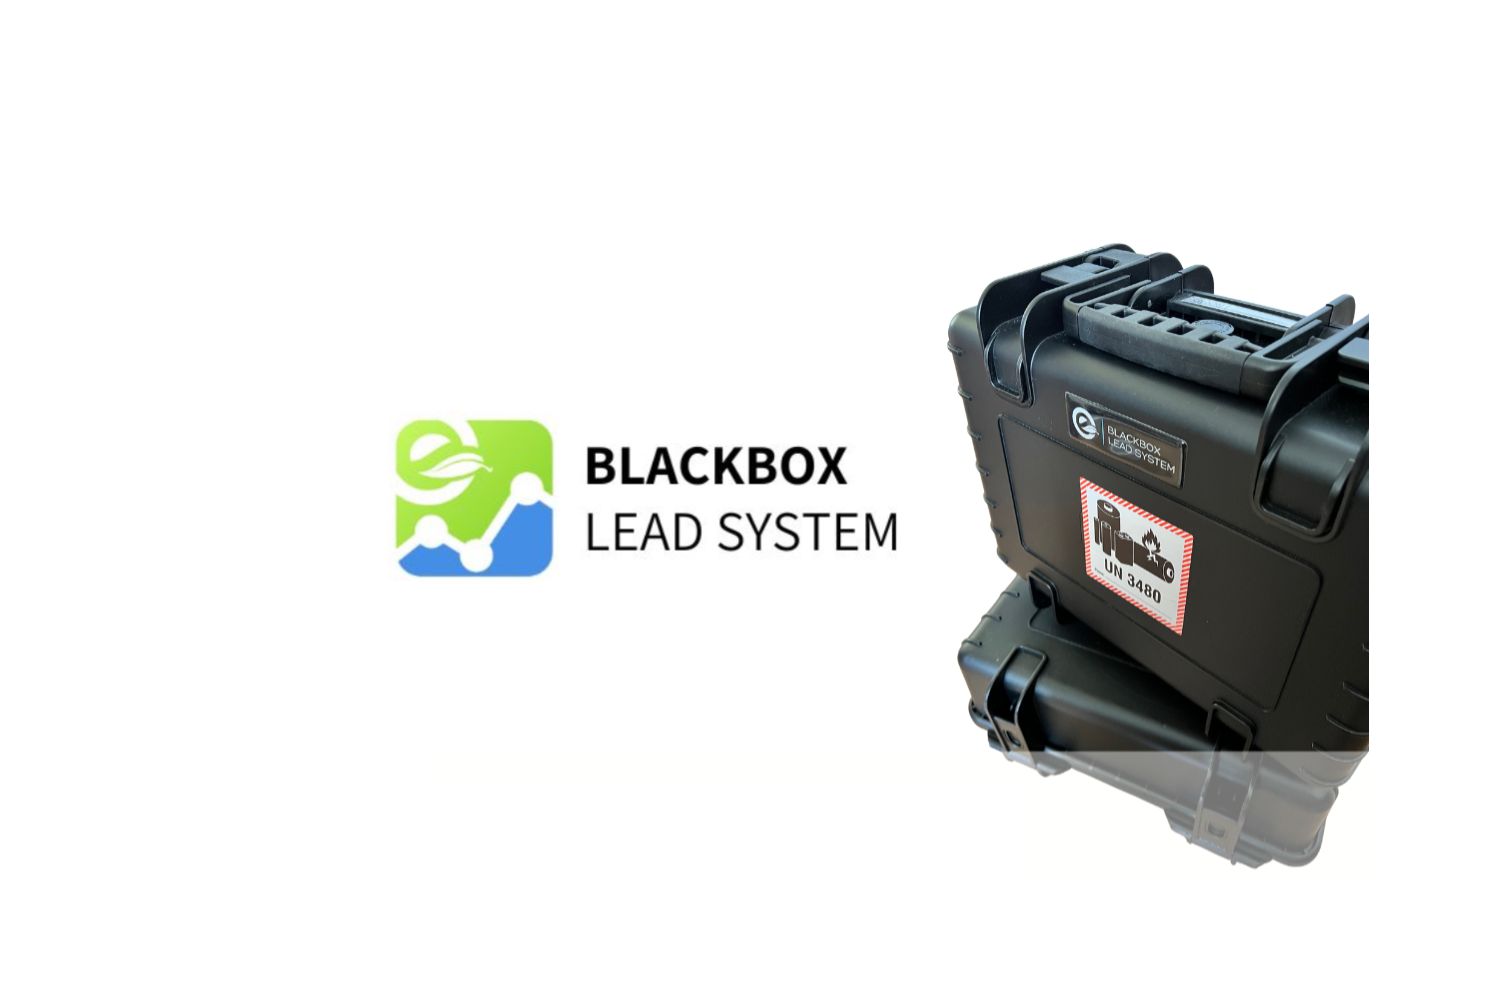 Blackbox Lead System